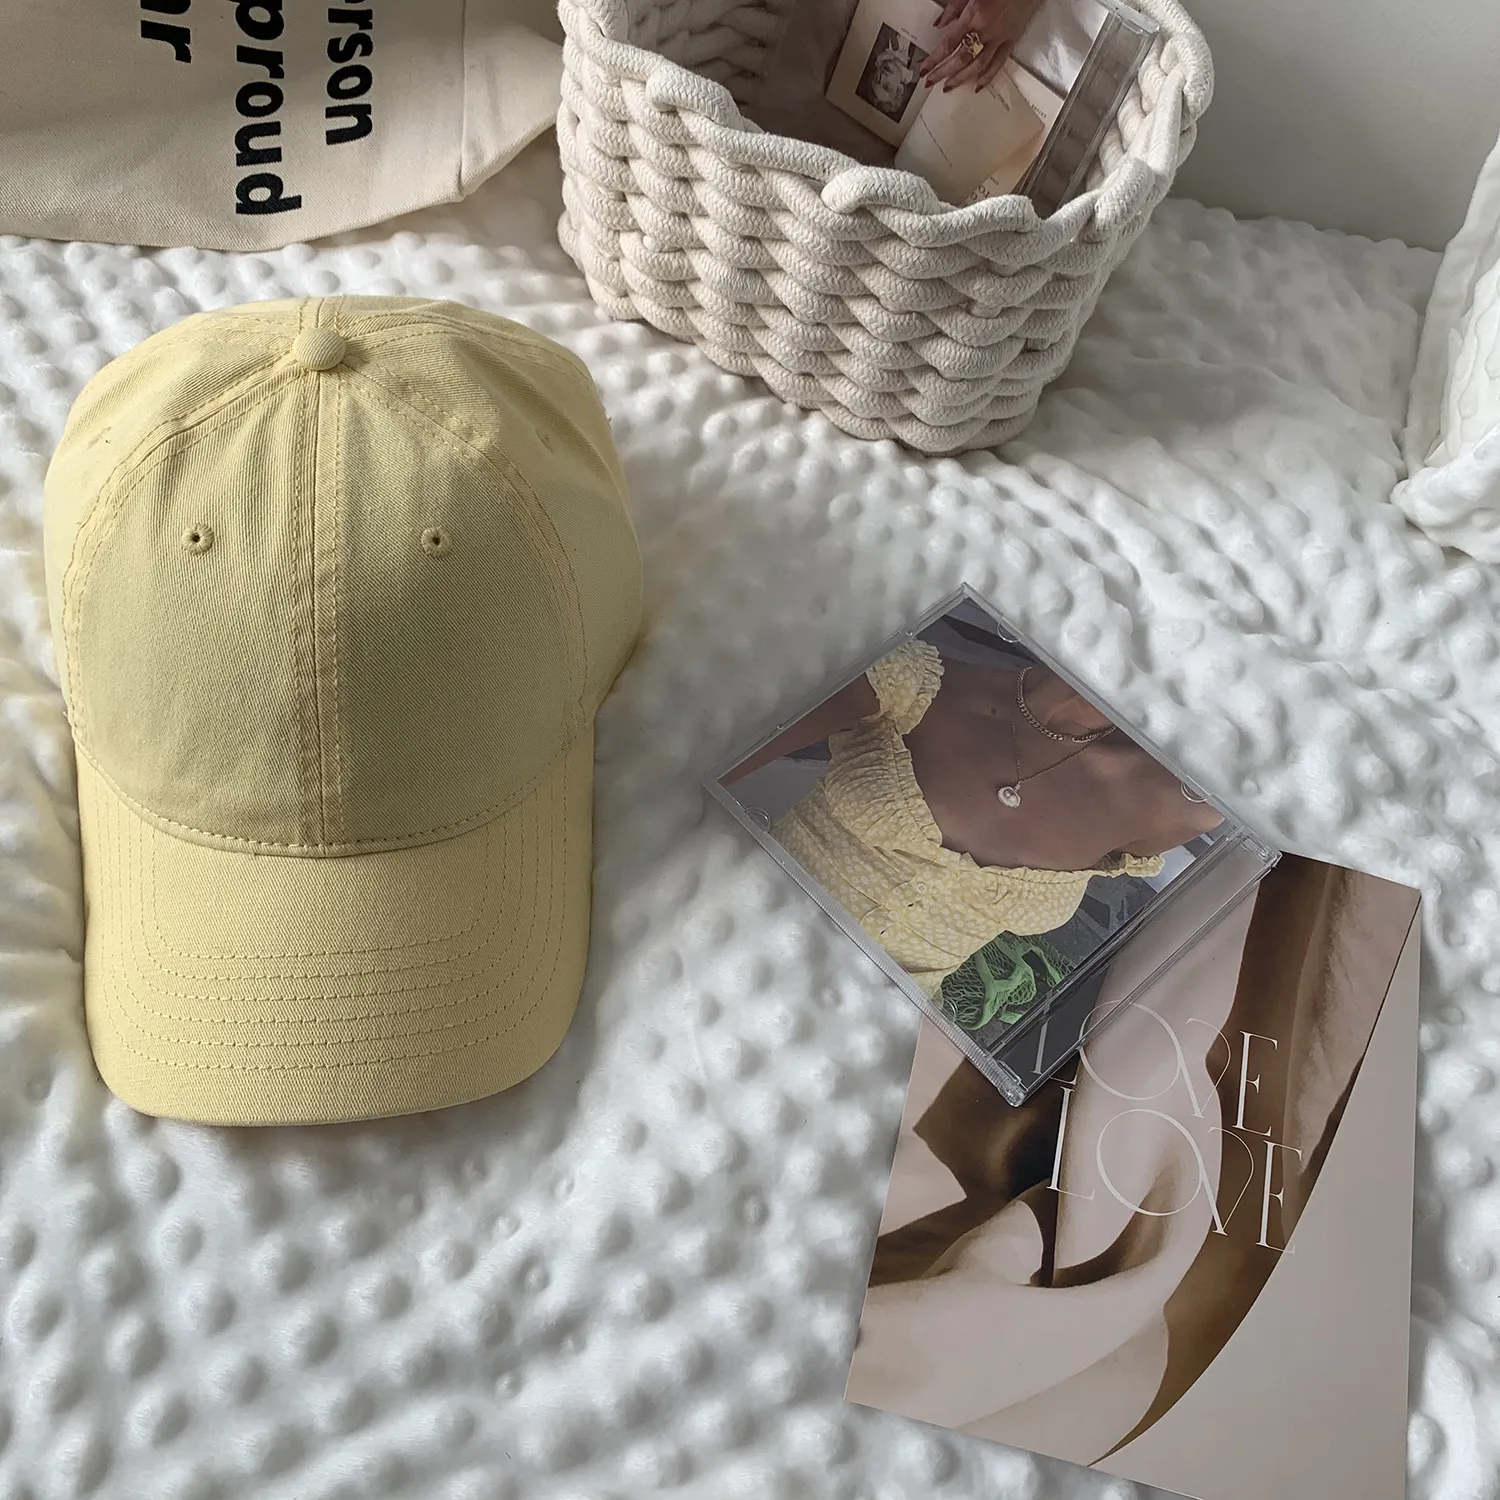 Casquette Stingy Brim Hats Classic Versatile King Soft Top Color Flat Cap Woman's Face Slimming Instagram Fashion Baseball Caps